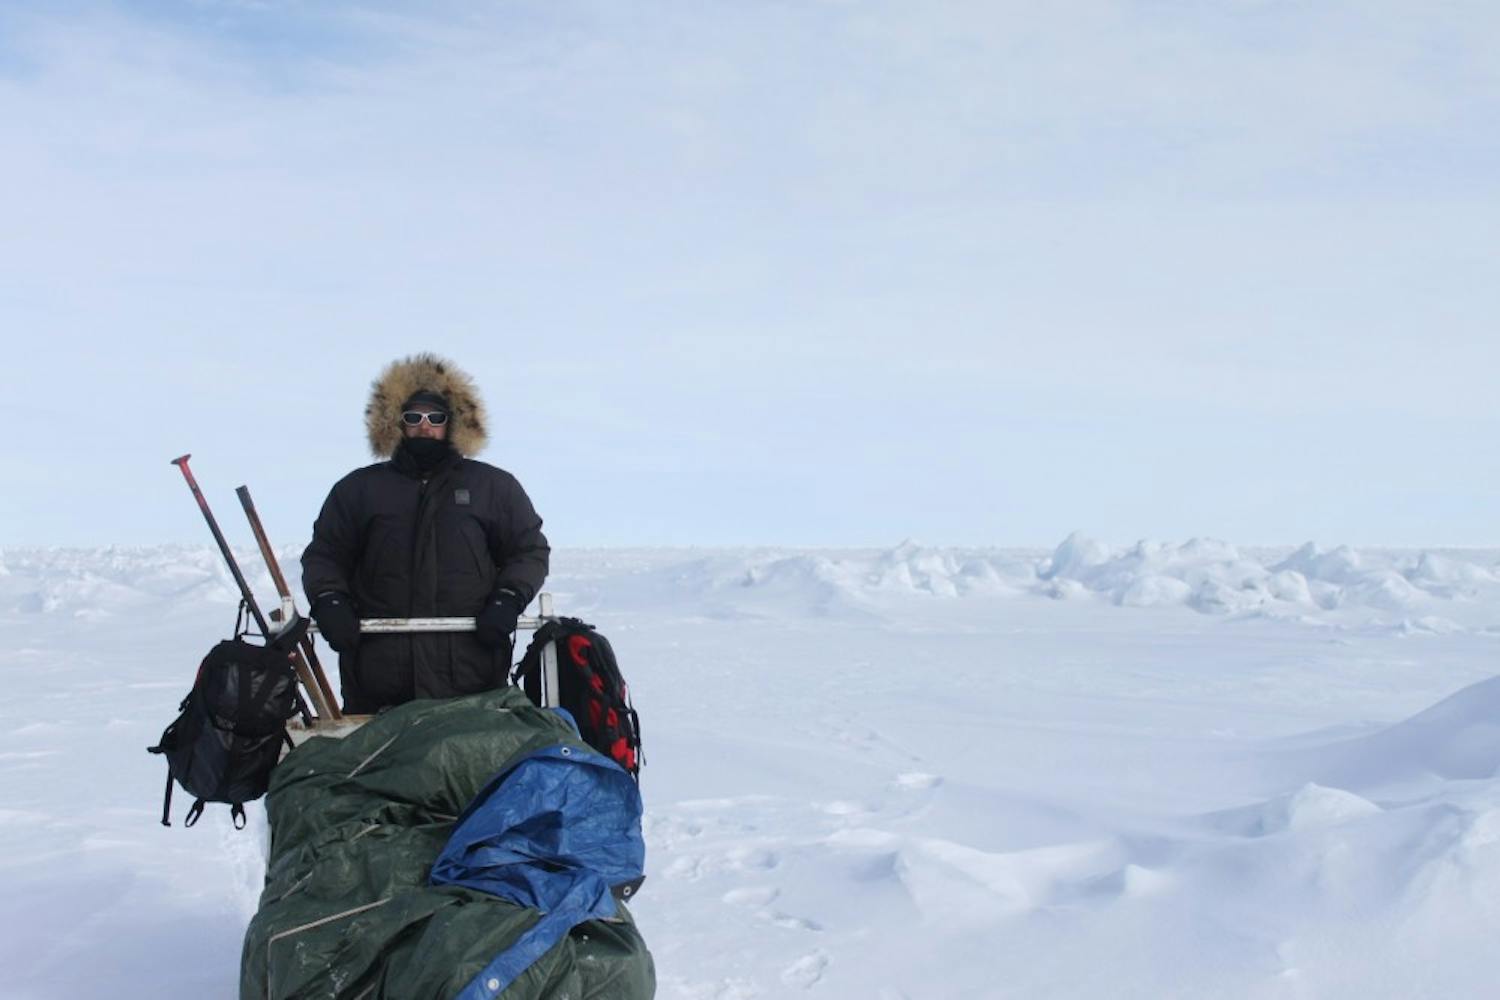 Kyle Kinzler on his most recent arctic adventure. Photo courtesy of Kyle Kinzler.